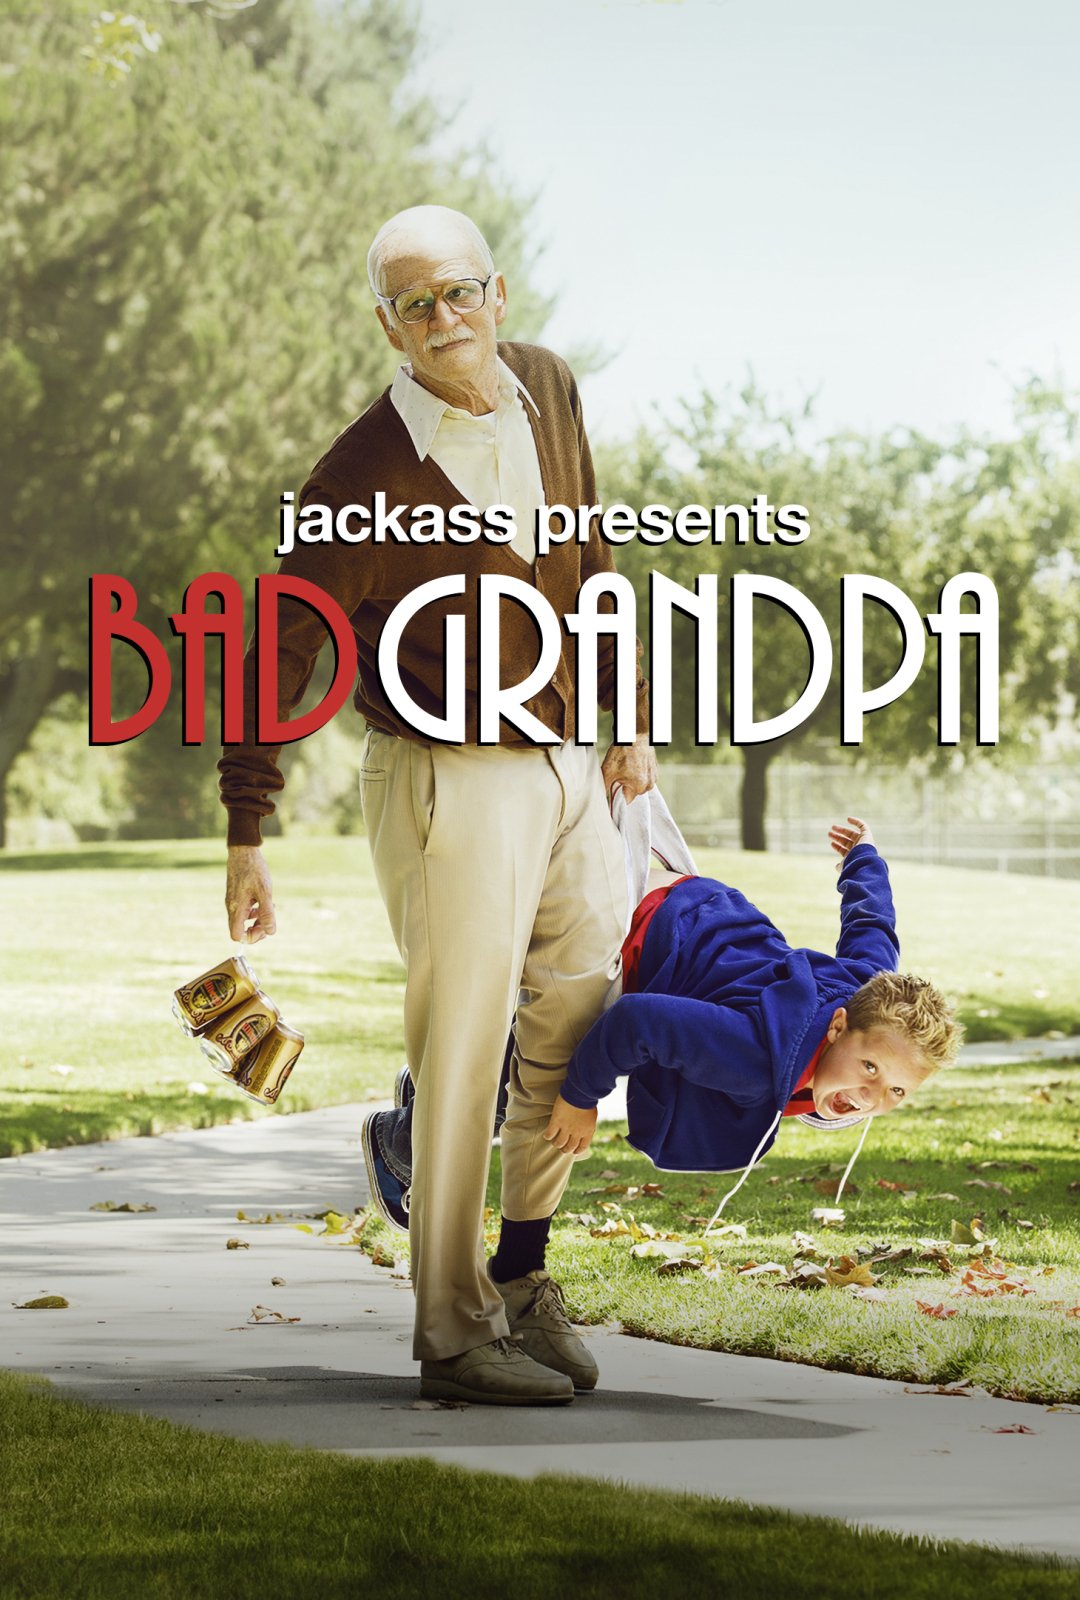 Jackass Presents: Bad Grandpa...